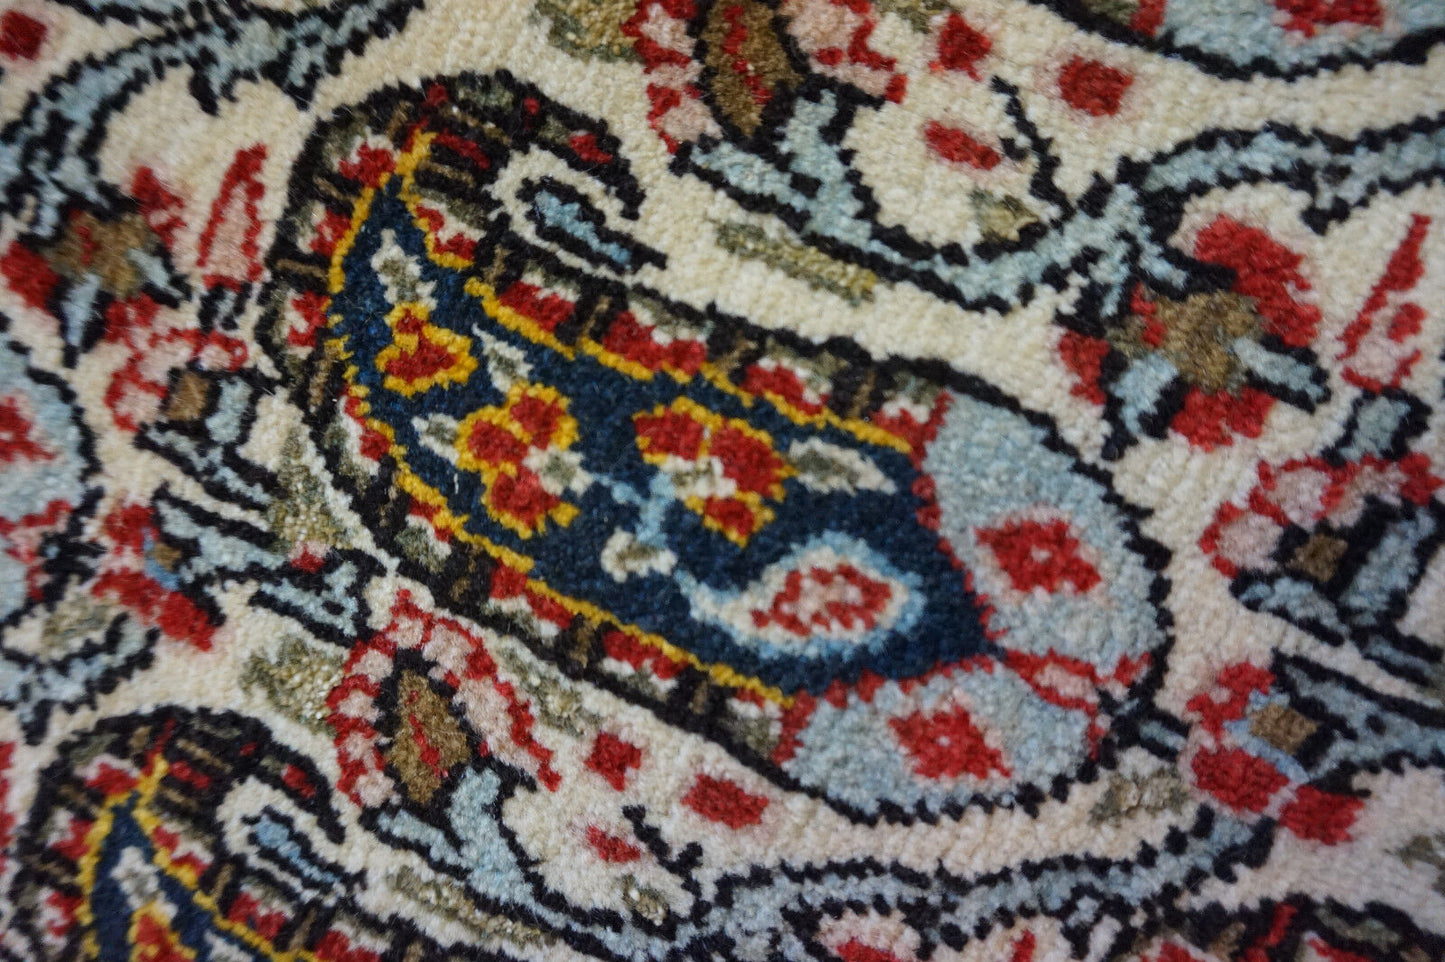 Detailed Artistry in Persian Heritage Rug